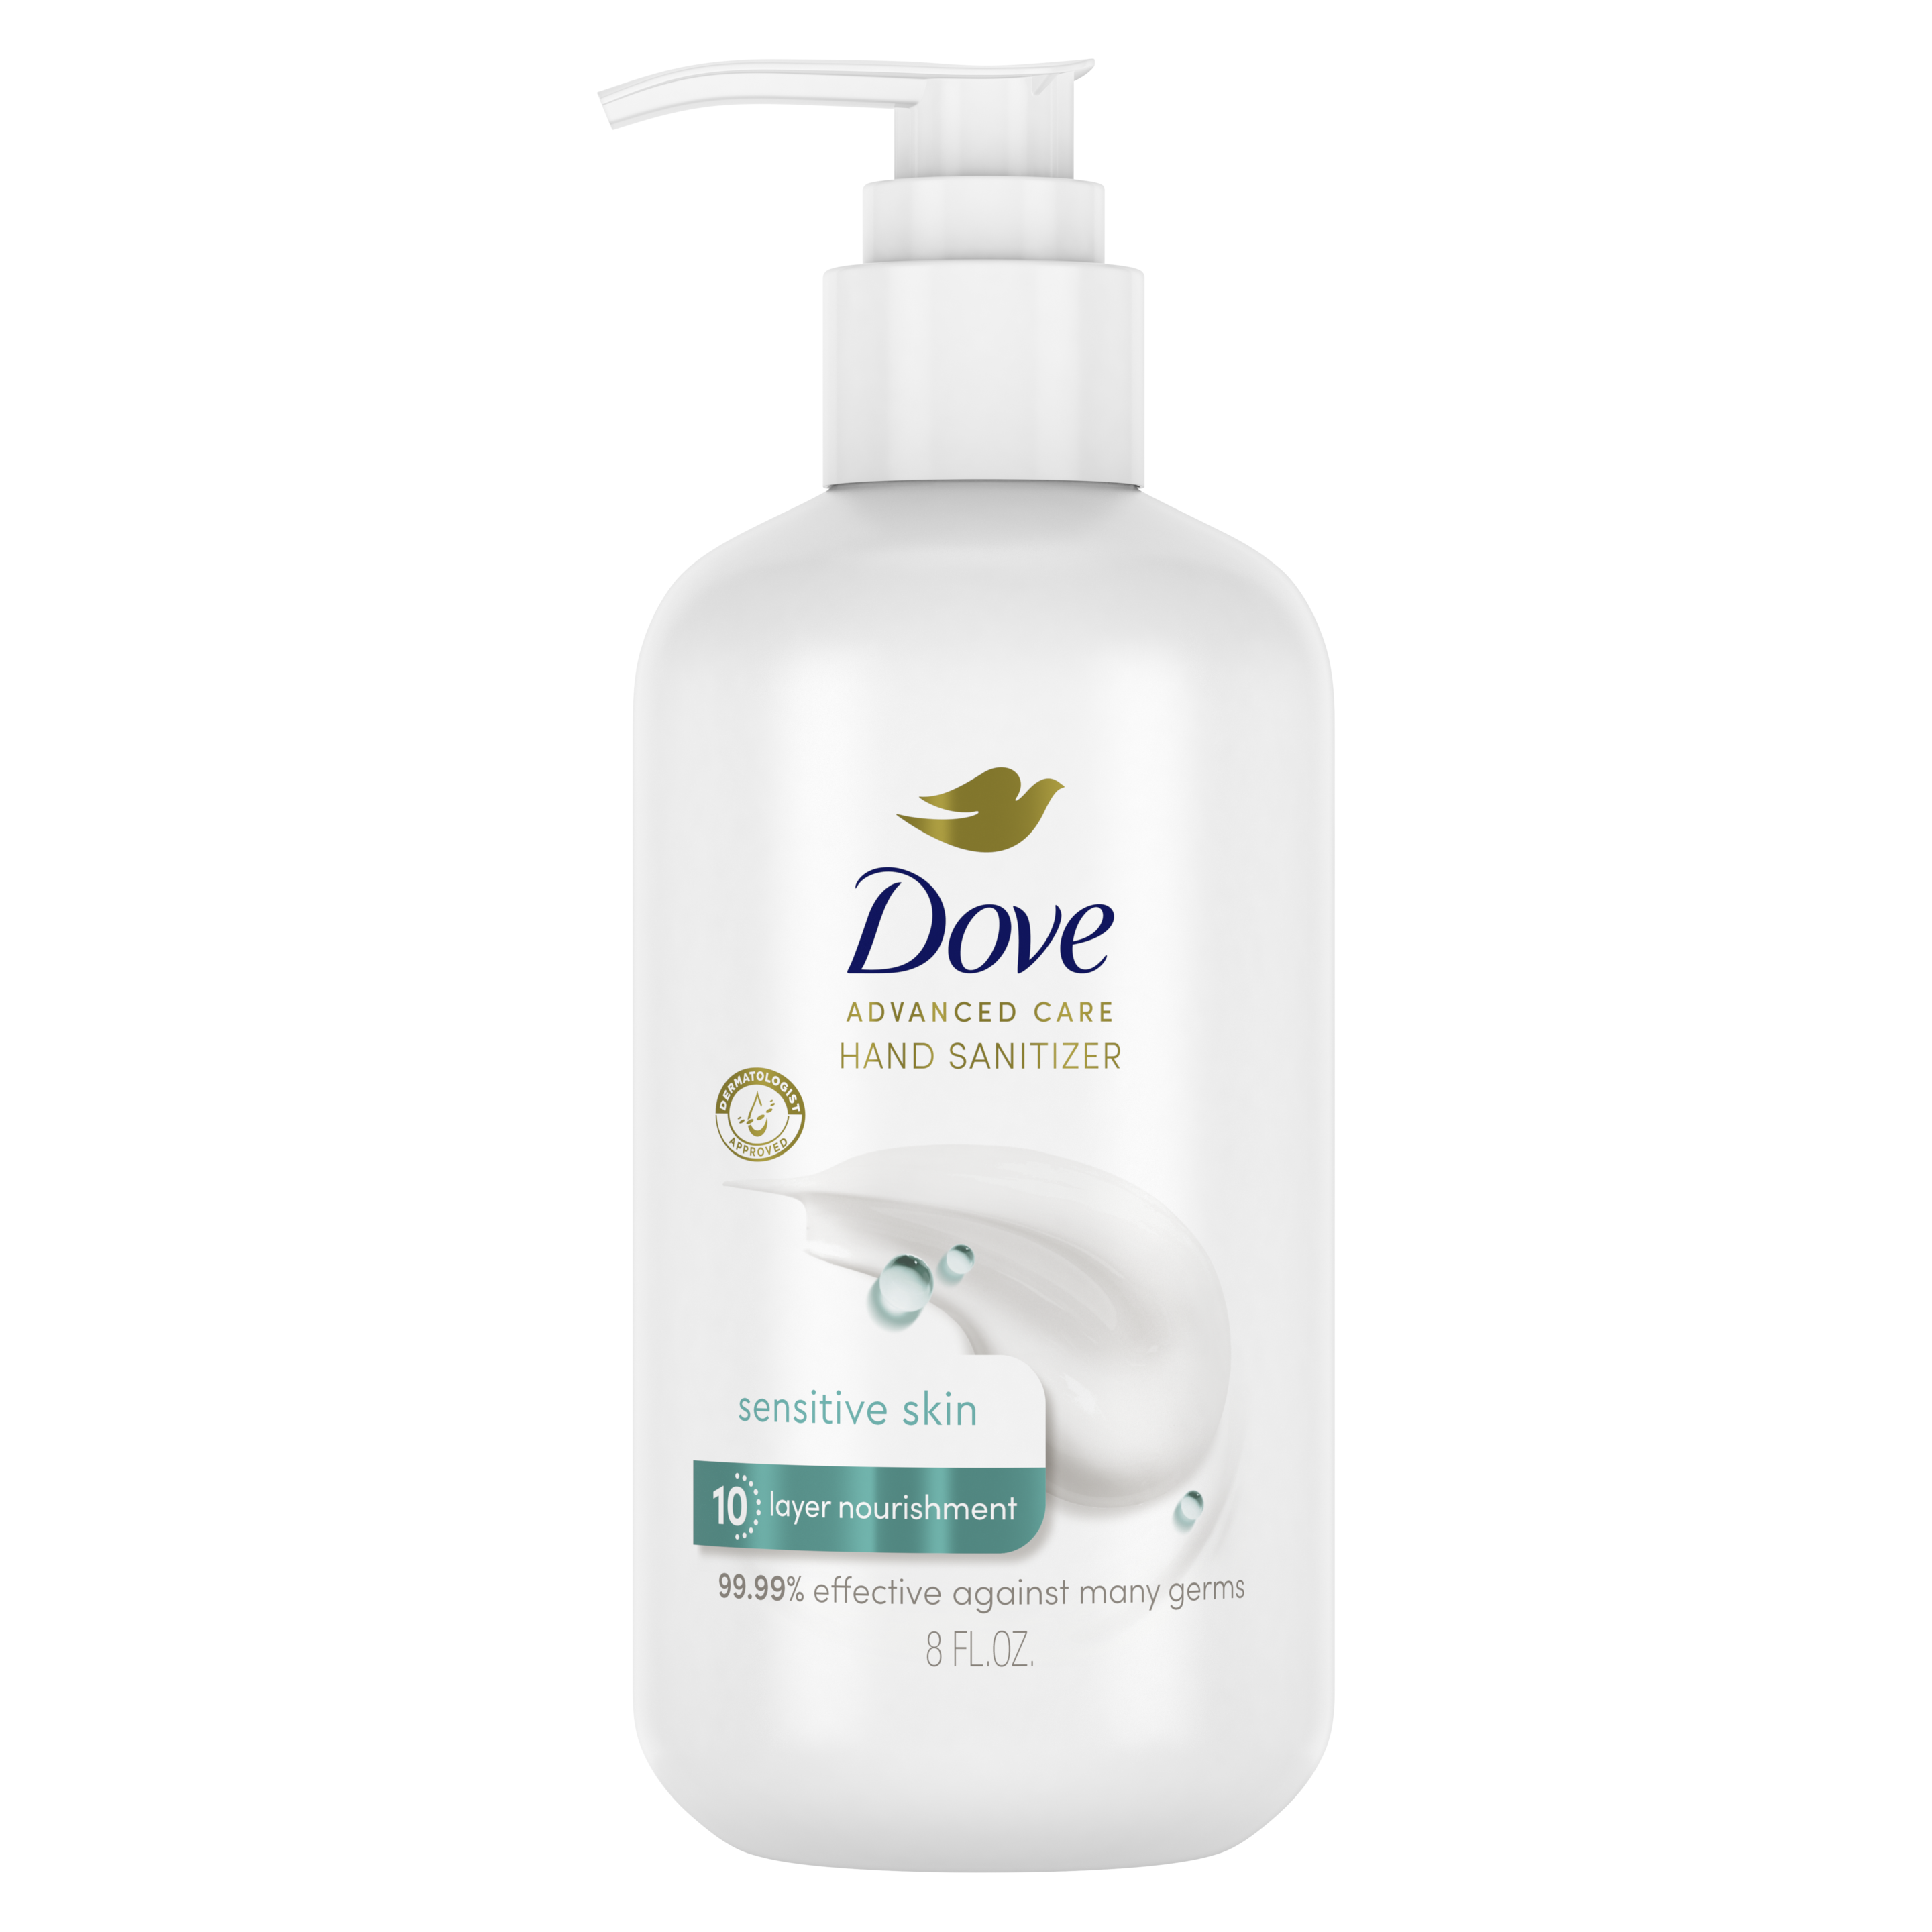 kern Barmhartig Habubu Advanced Care Sensitive Skin Hand Sanitizer | Dove